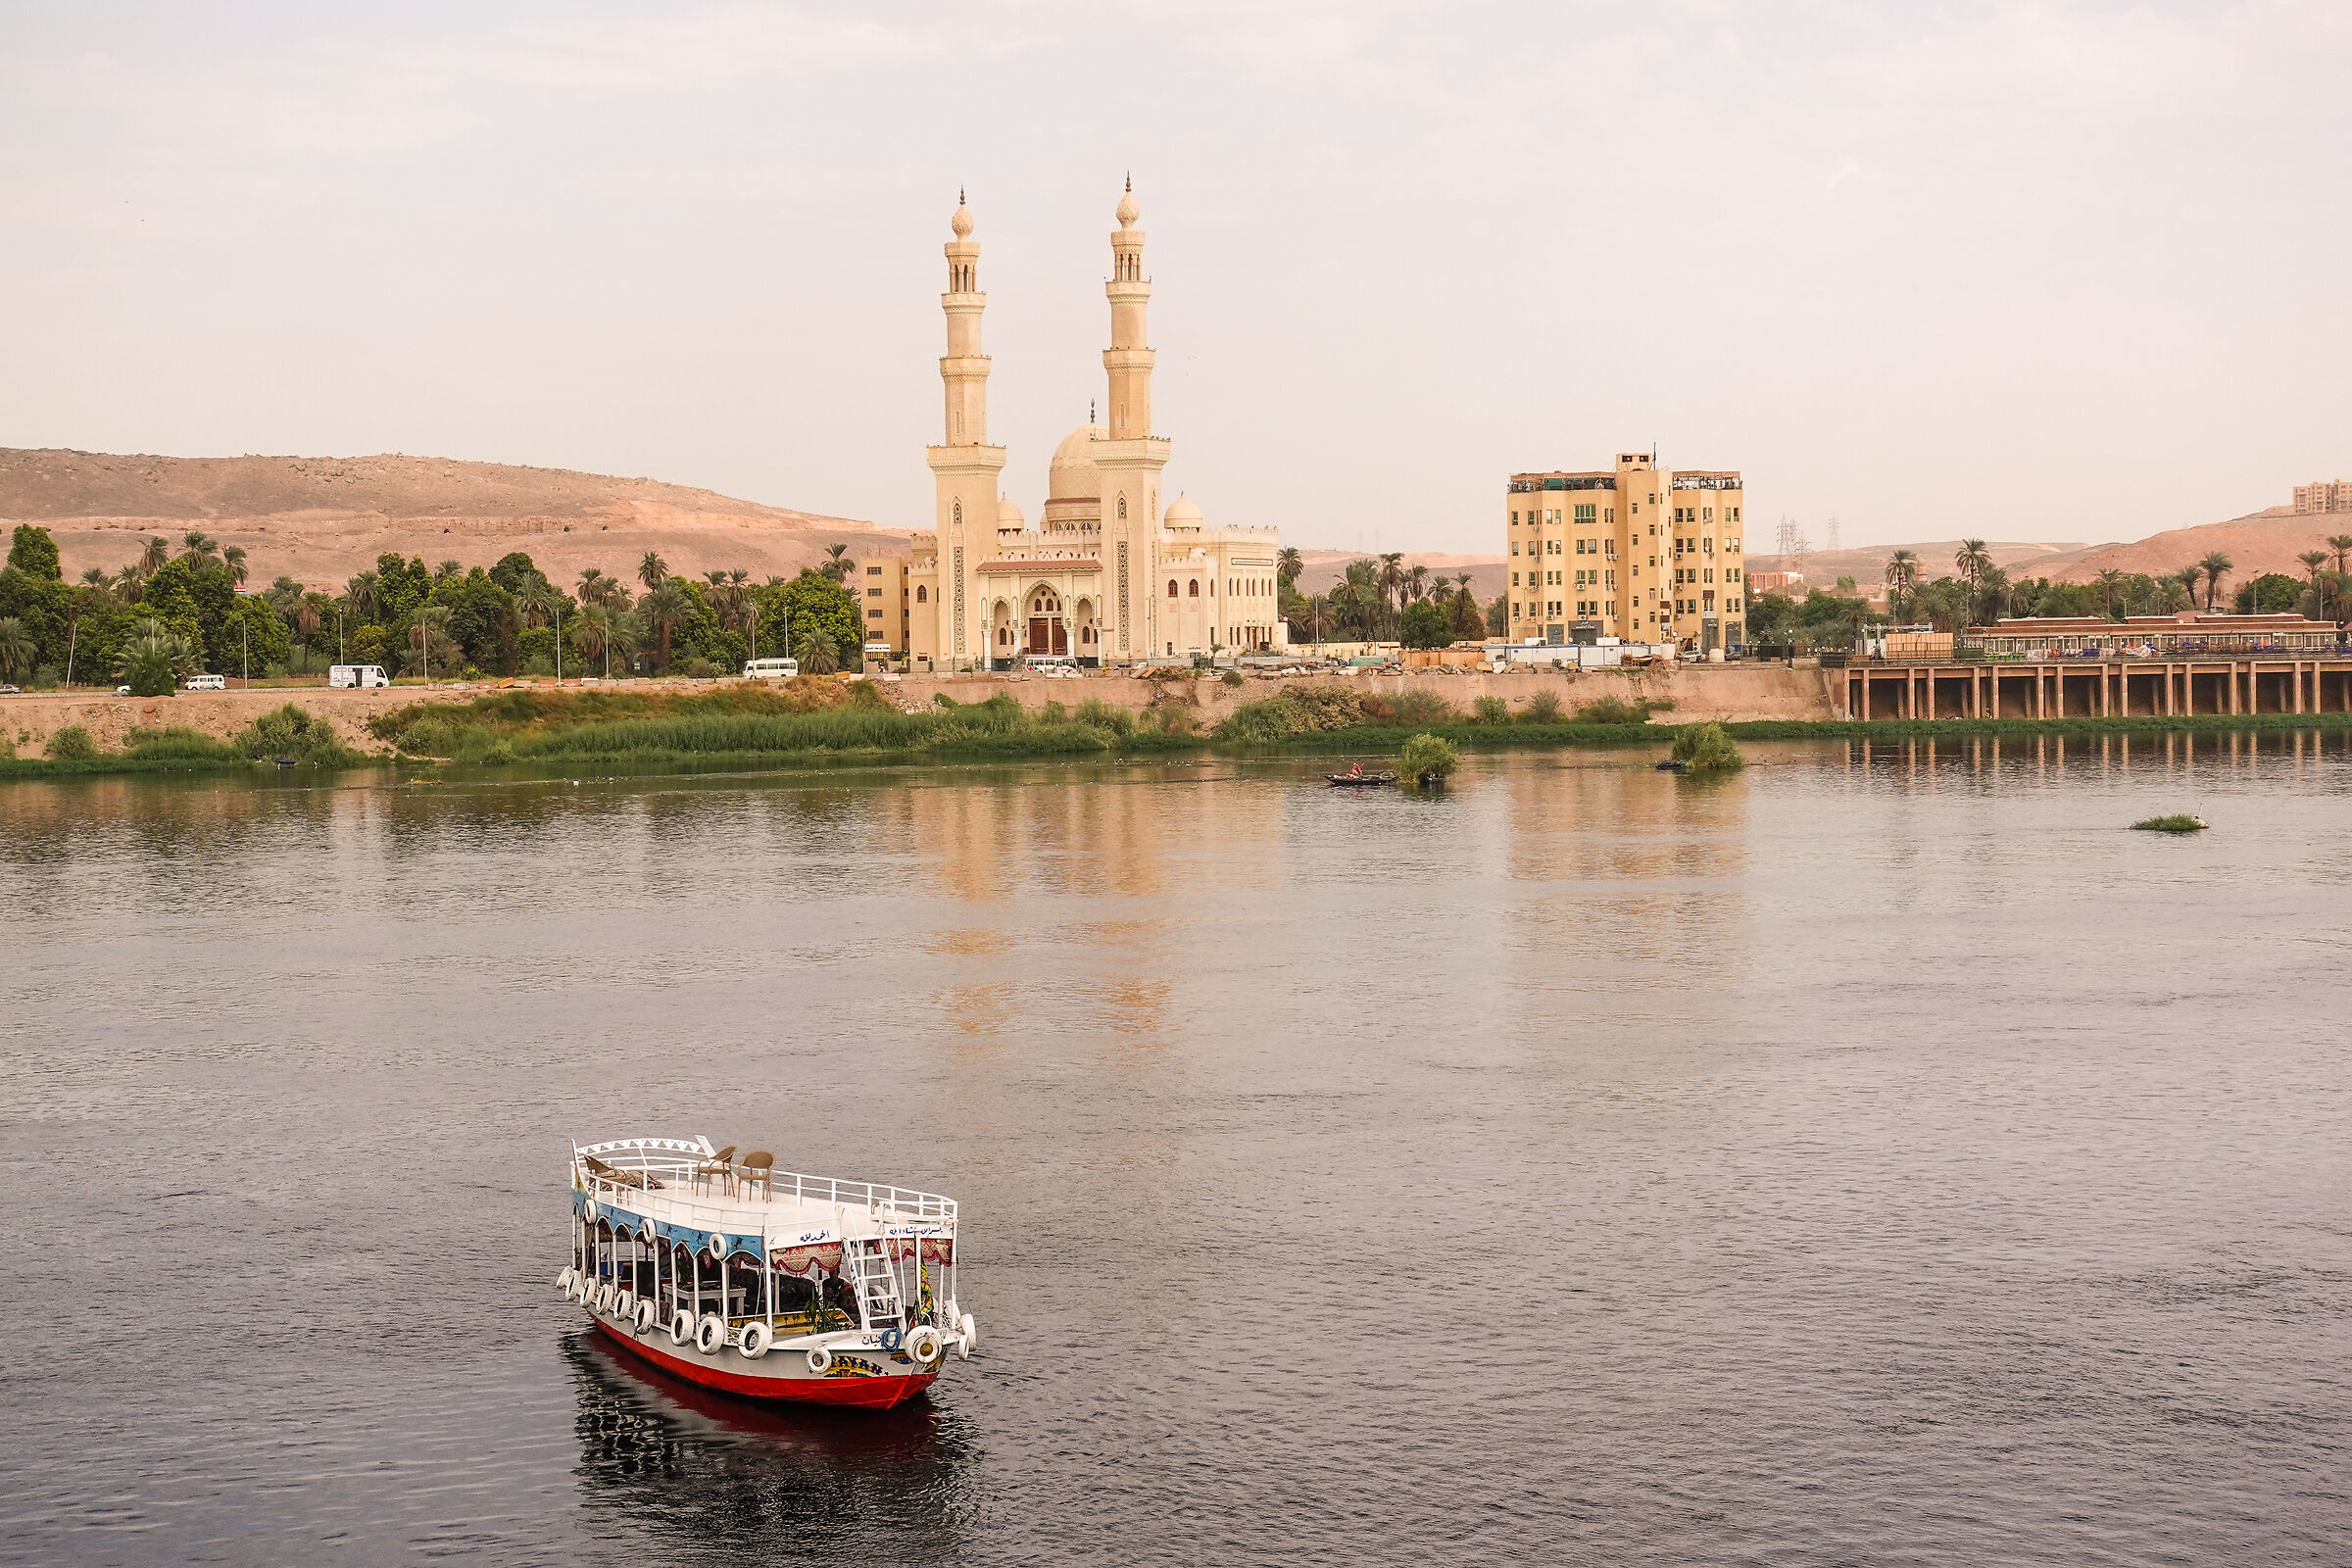 along the Nile...